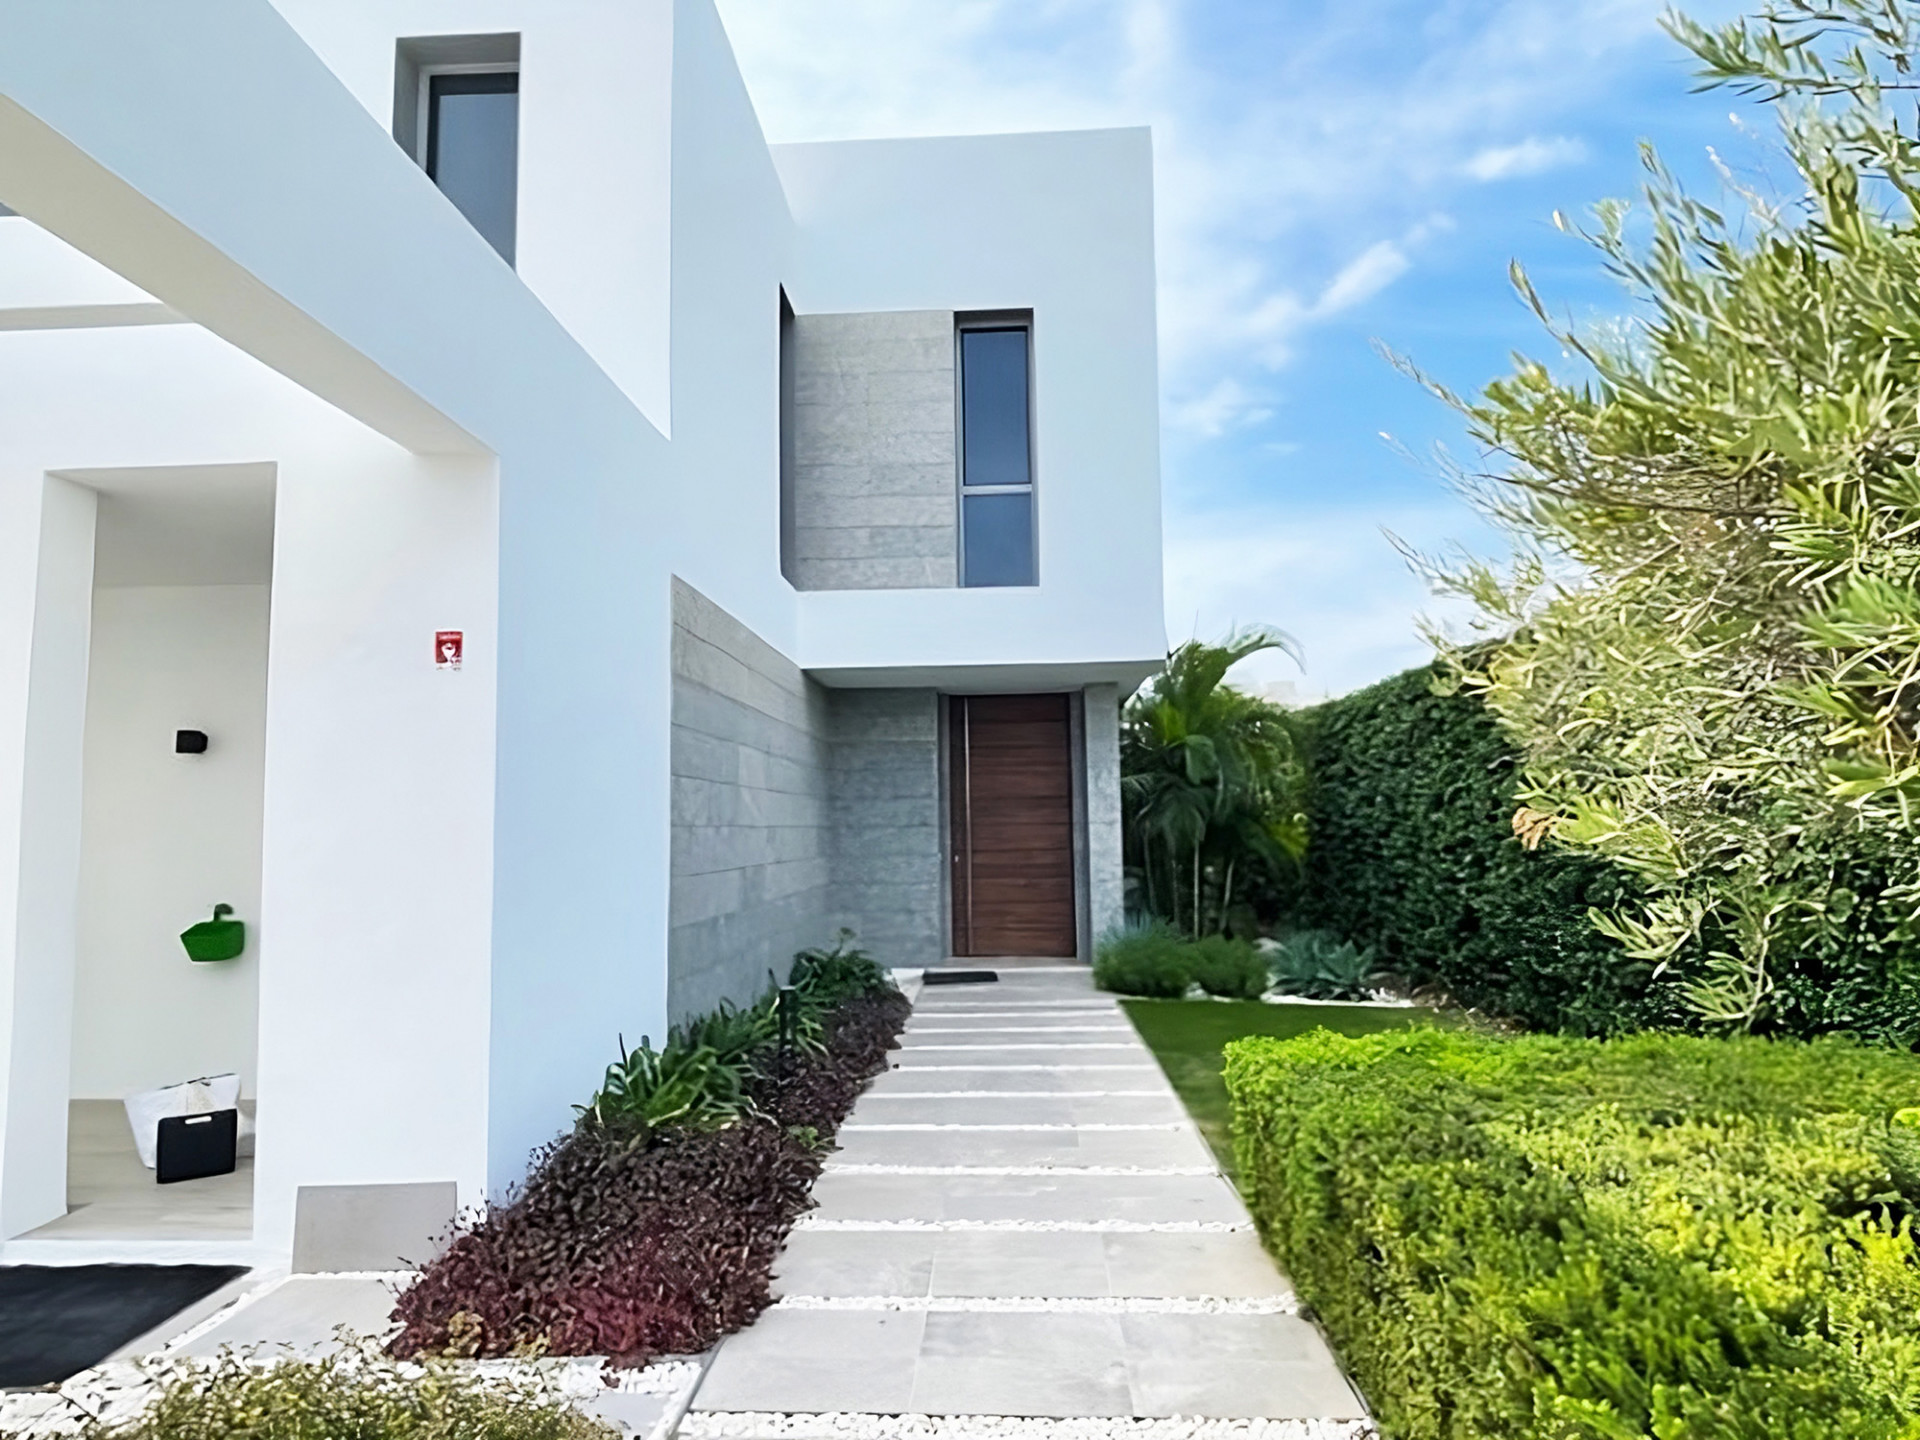 Contemporary villa located near the Los Flamingos Golf club, close to every amenity